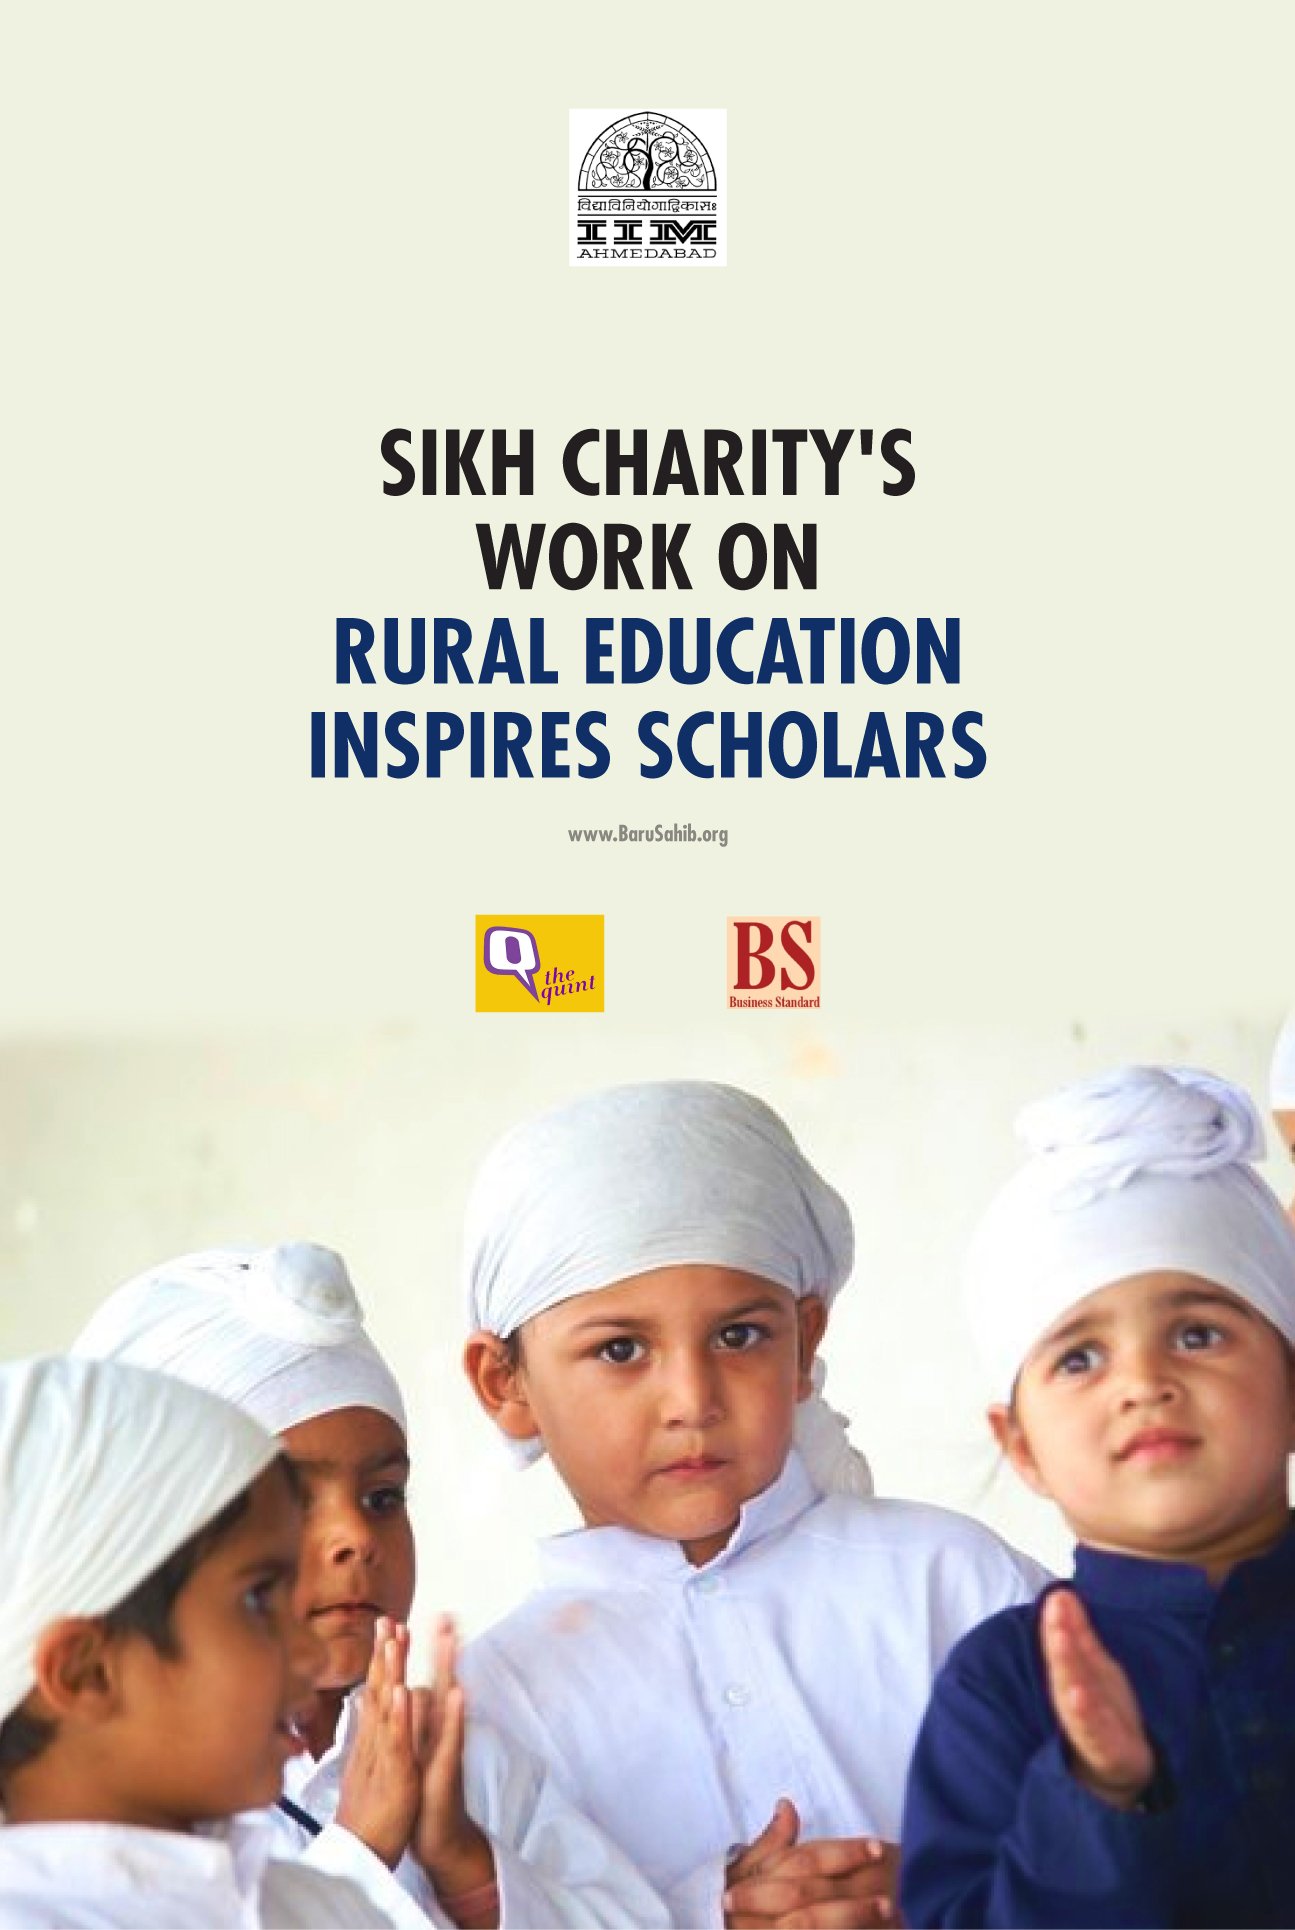 Sikh-charitys-work-on-rural-education-inspires-scholars